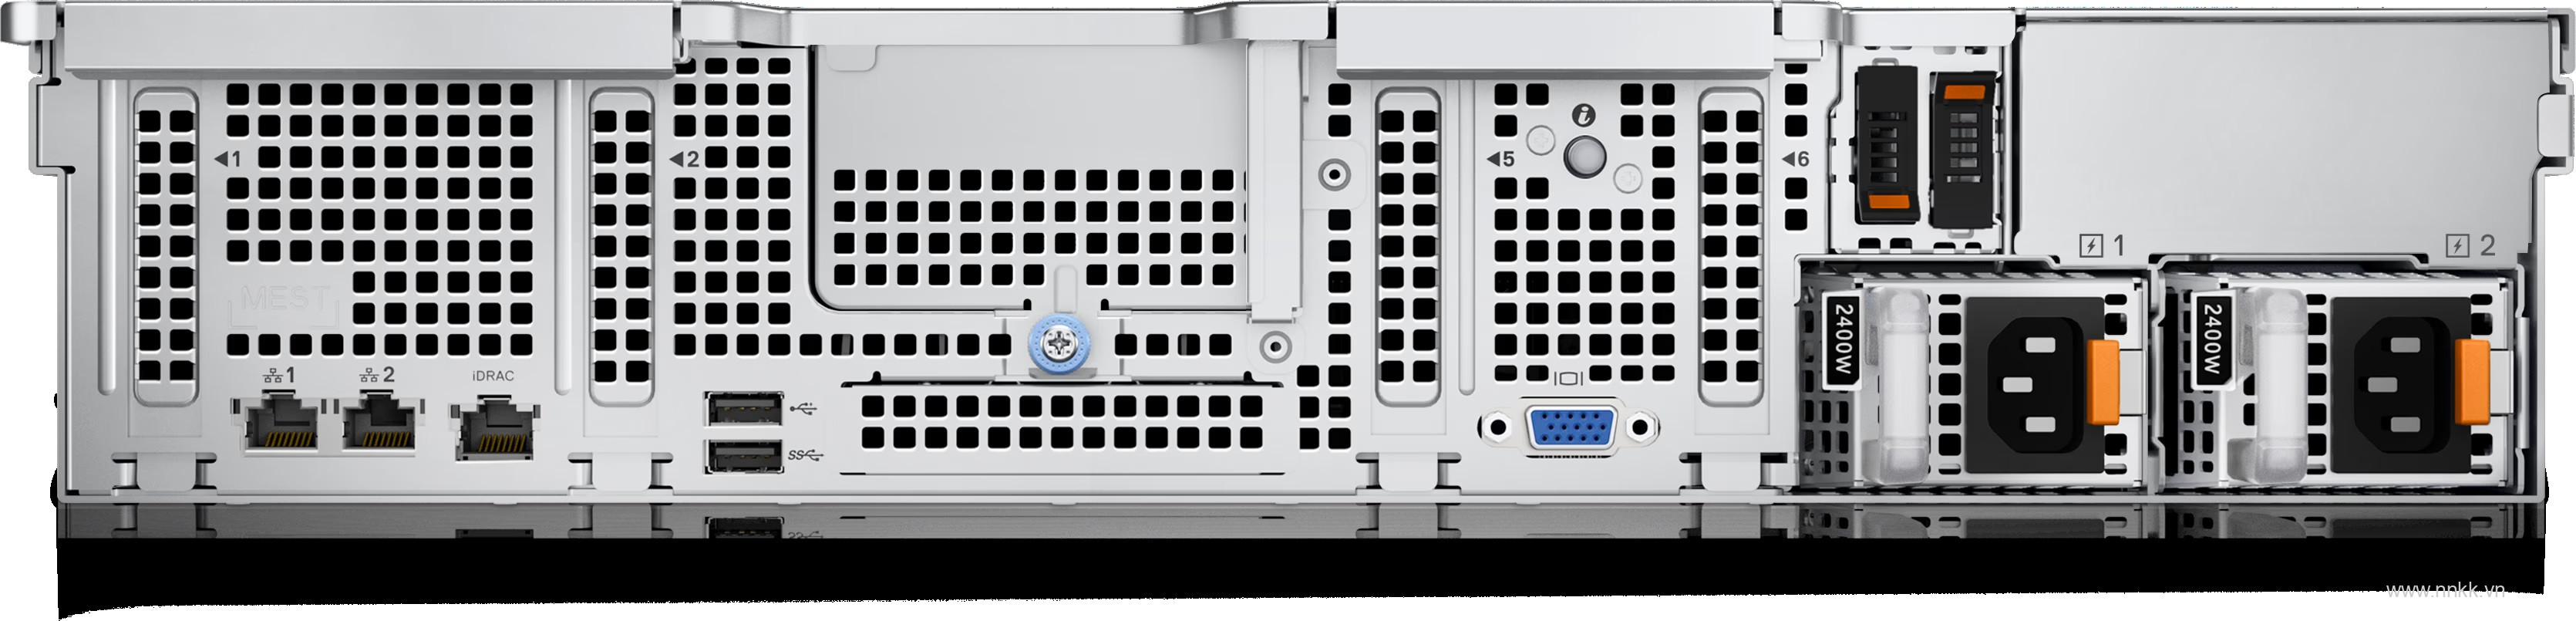 Máy chủ PowerEdge R550 Rack Server Silver 4310, Ram 16GB, HDD 1.2TB 10K